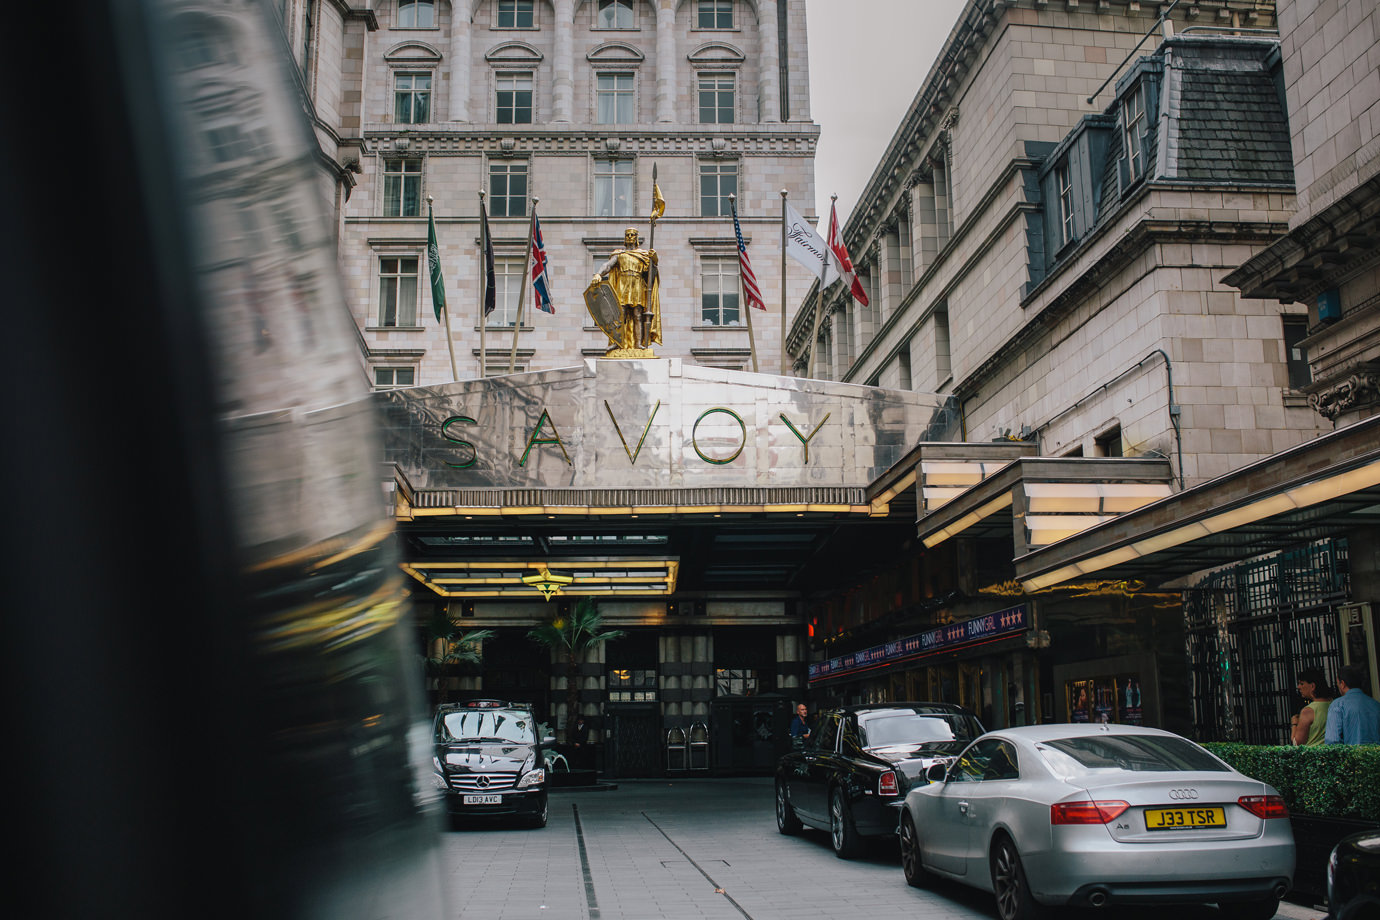 Savoy hotel, documentary wedding photography